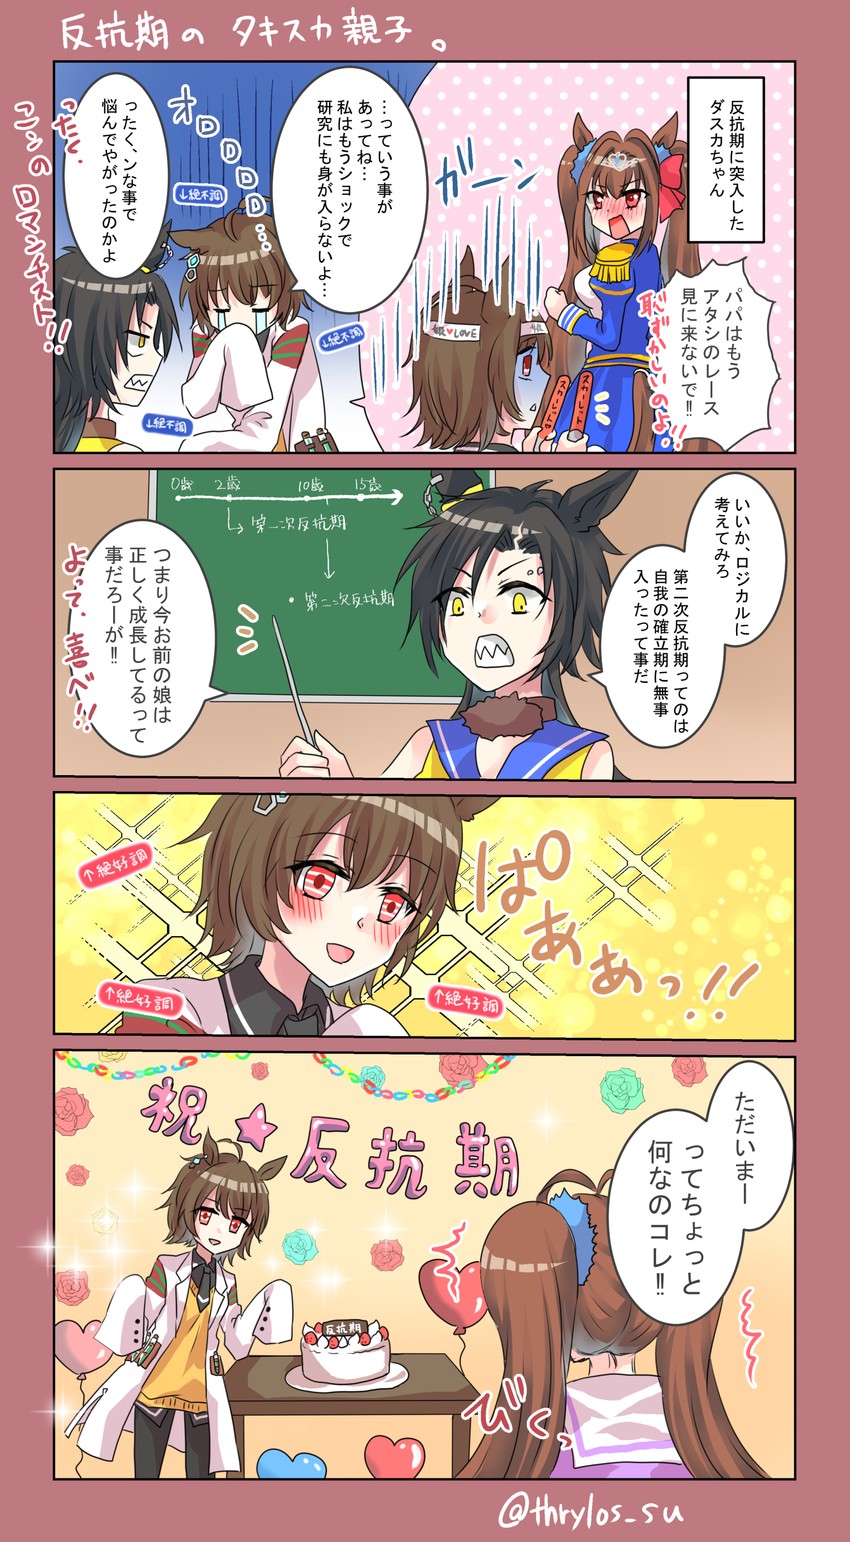 daiwa scarlet, agnes tachyon, and air shakur (umamusume) drawn by thrylos_su